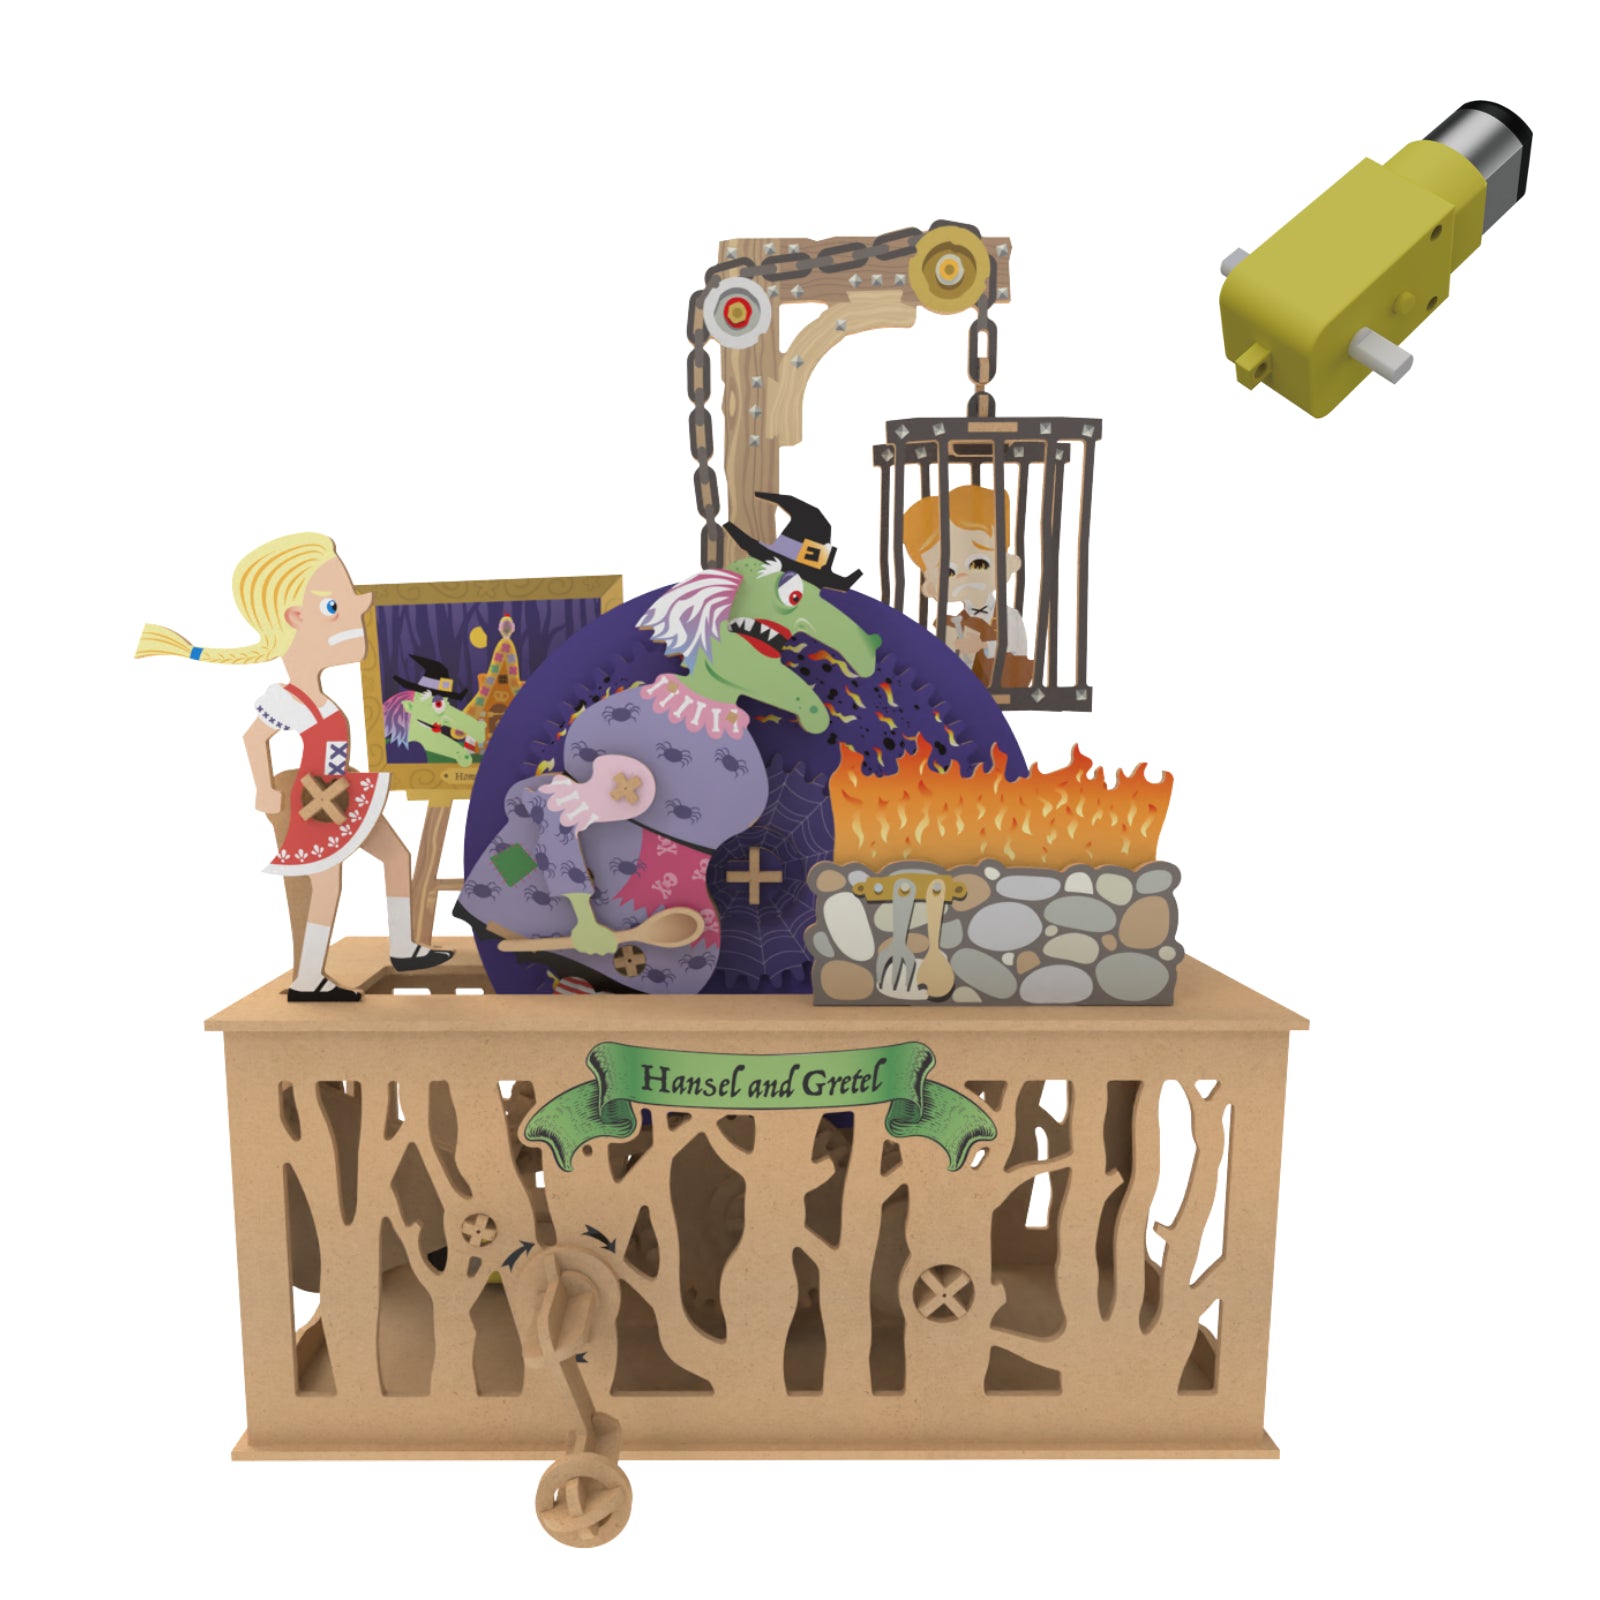 iló Mechanical Wooden Automata Hansel & Gretel